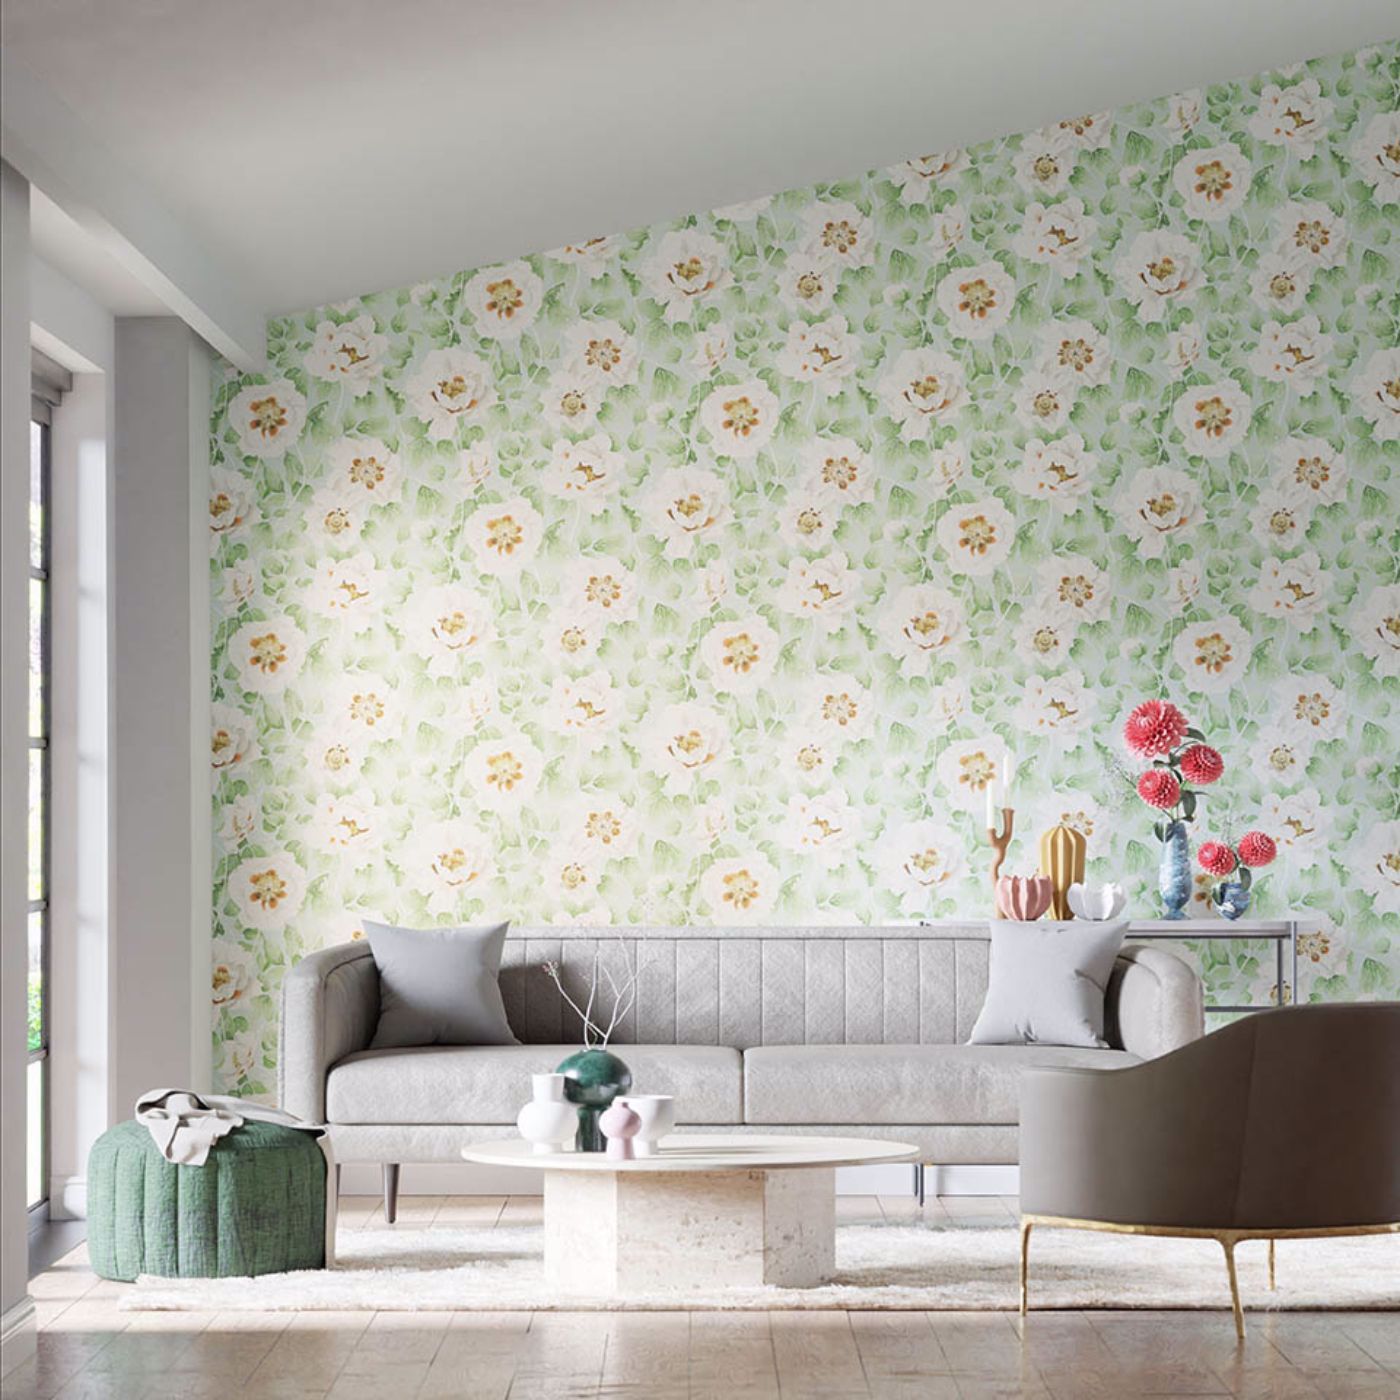 Florent Room Wallpaper - Seaglass/Clover/Rosehip